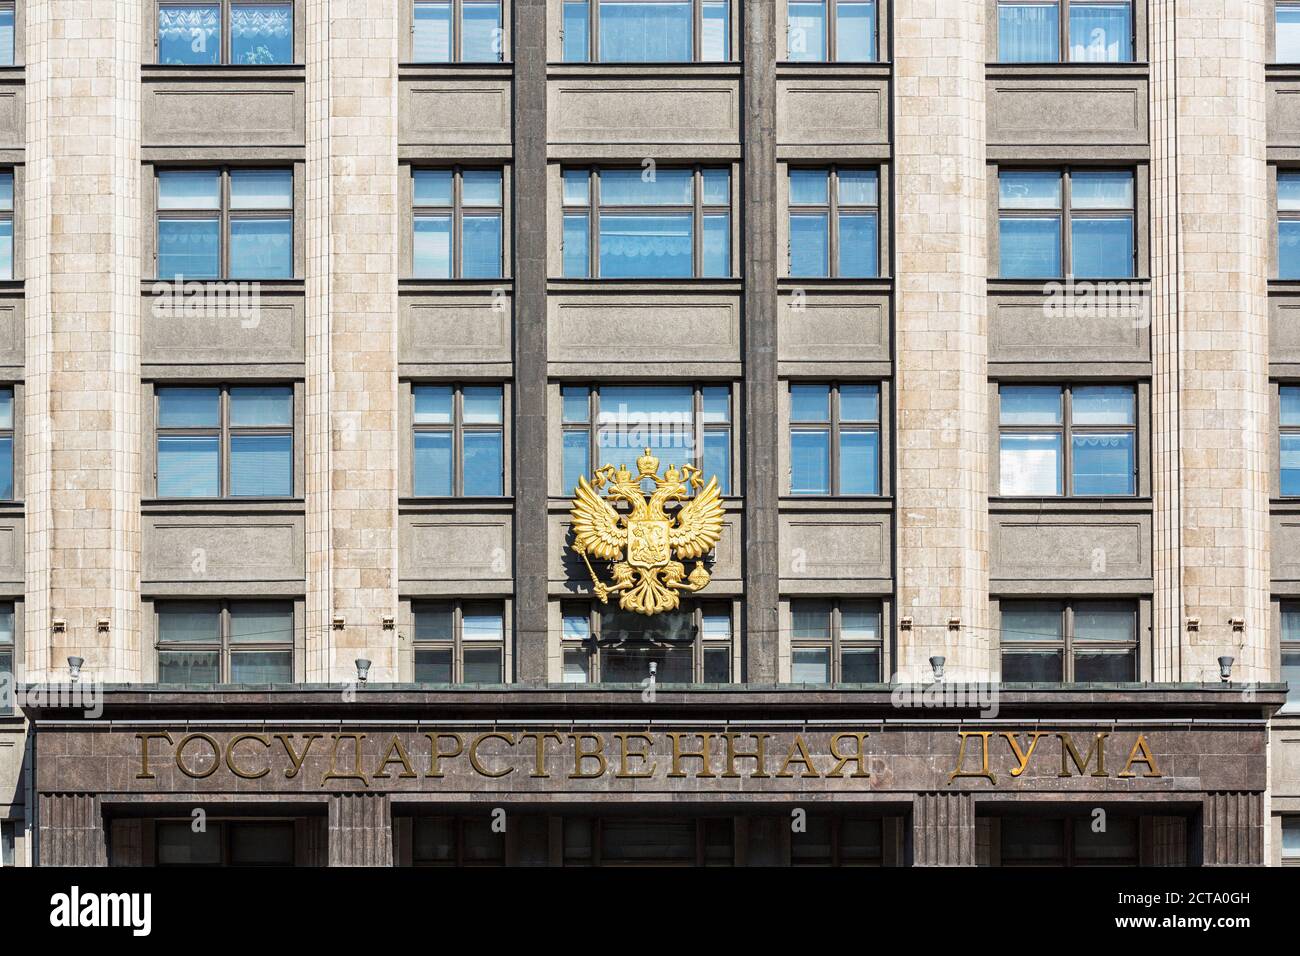 Rusia, la parte central de Rusia, Moscú, la Duma Estatal, la cámara baja de la Asamblea Federal de Rusia, doble águila en la fachada Foto de stock